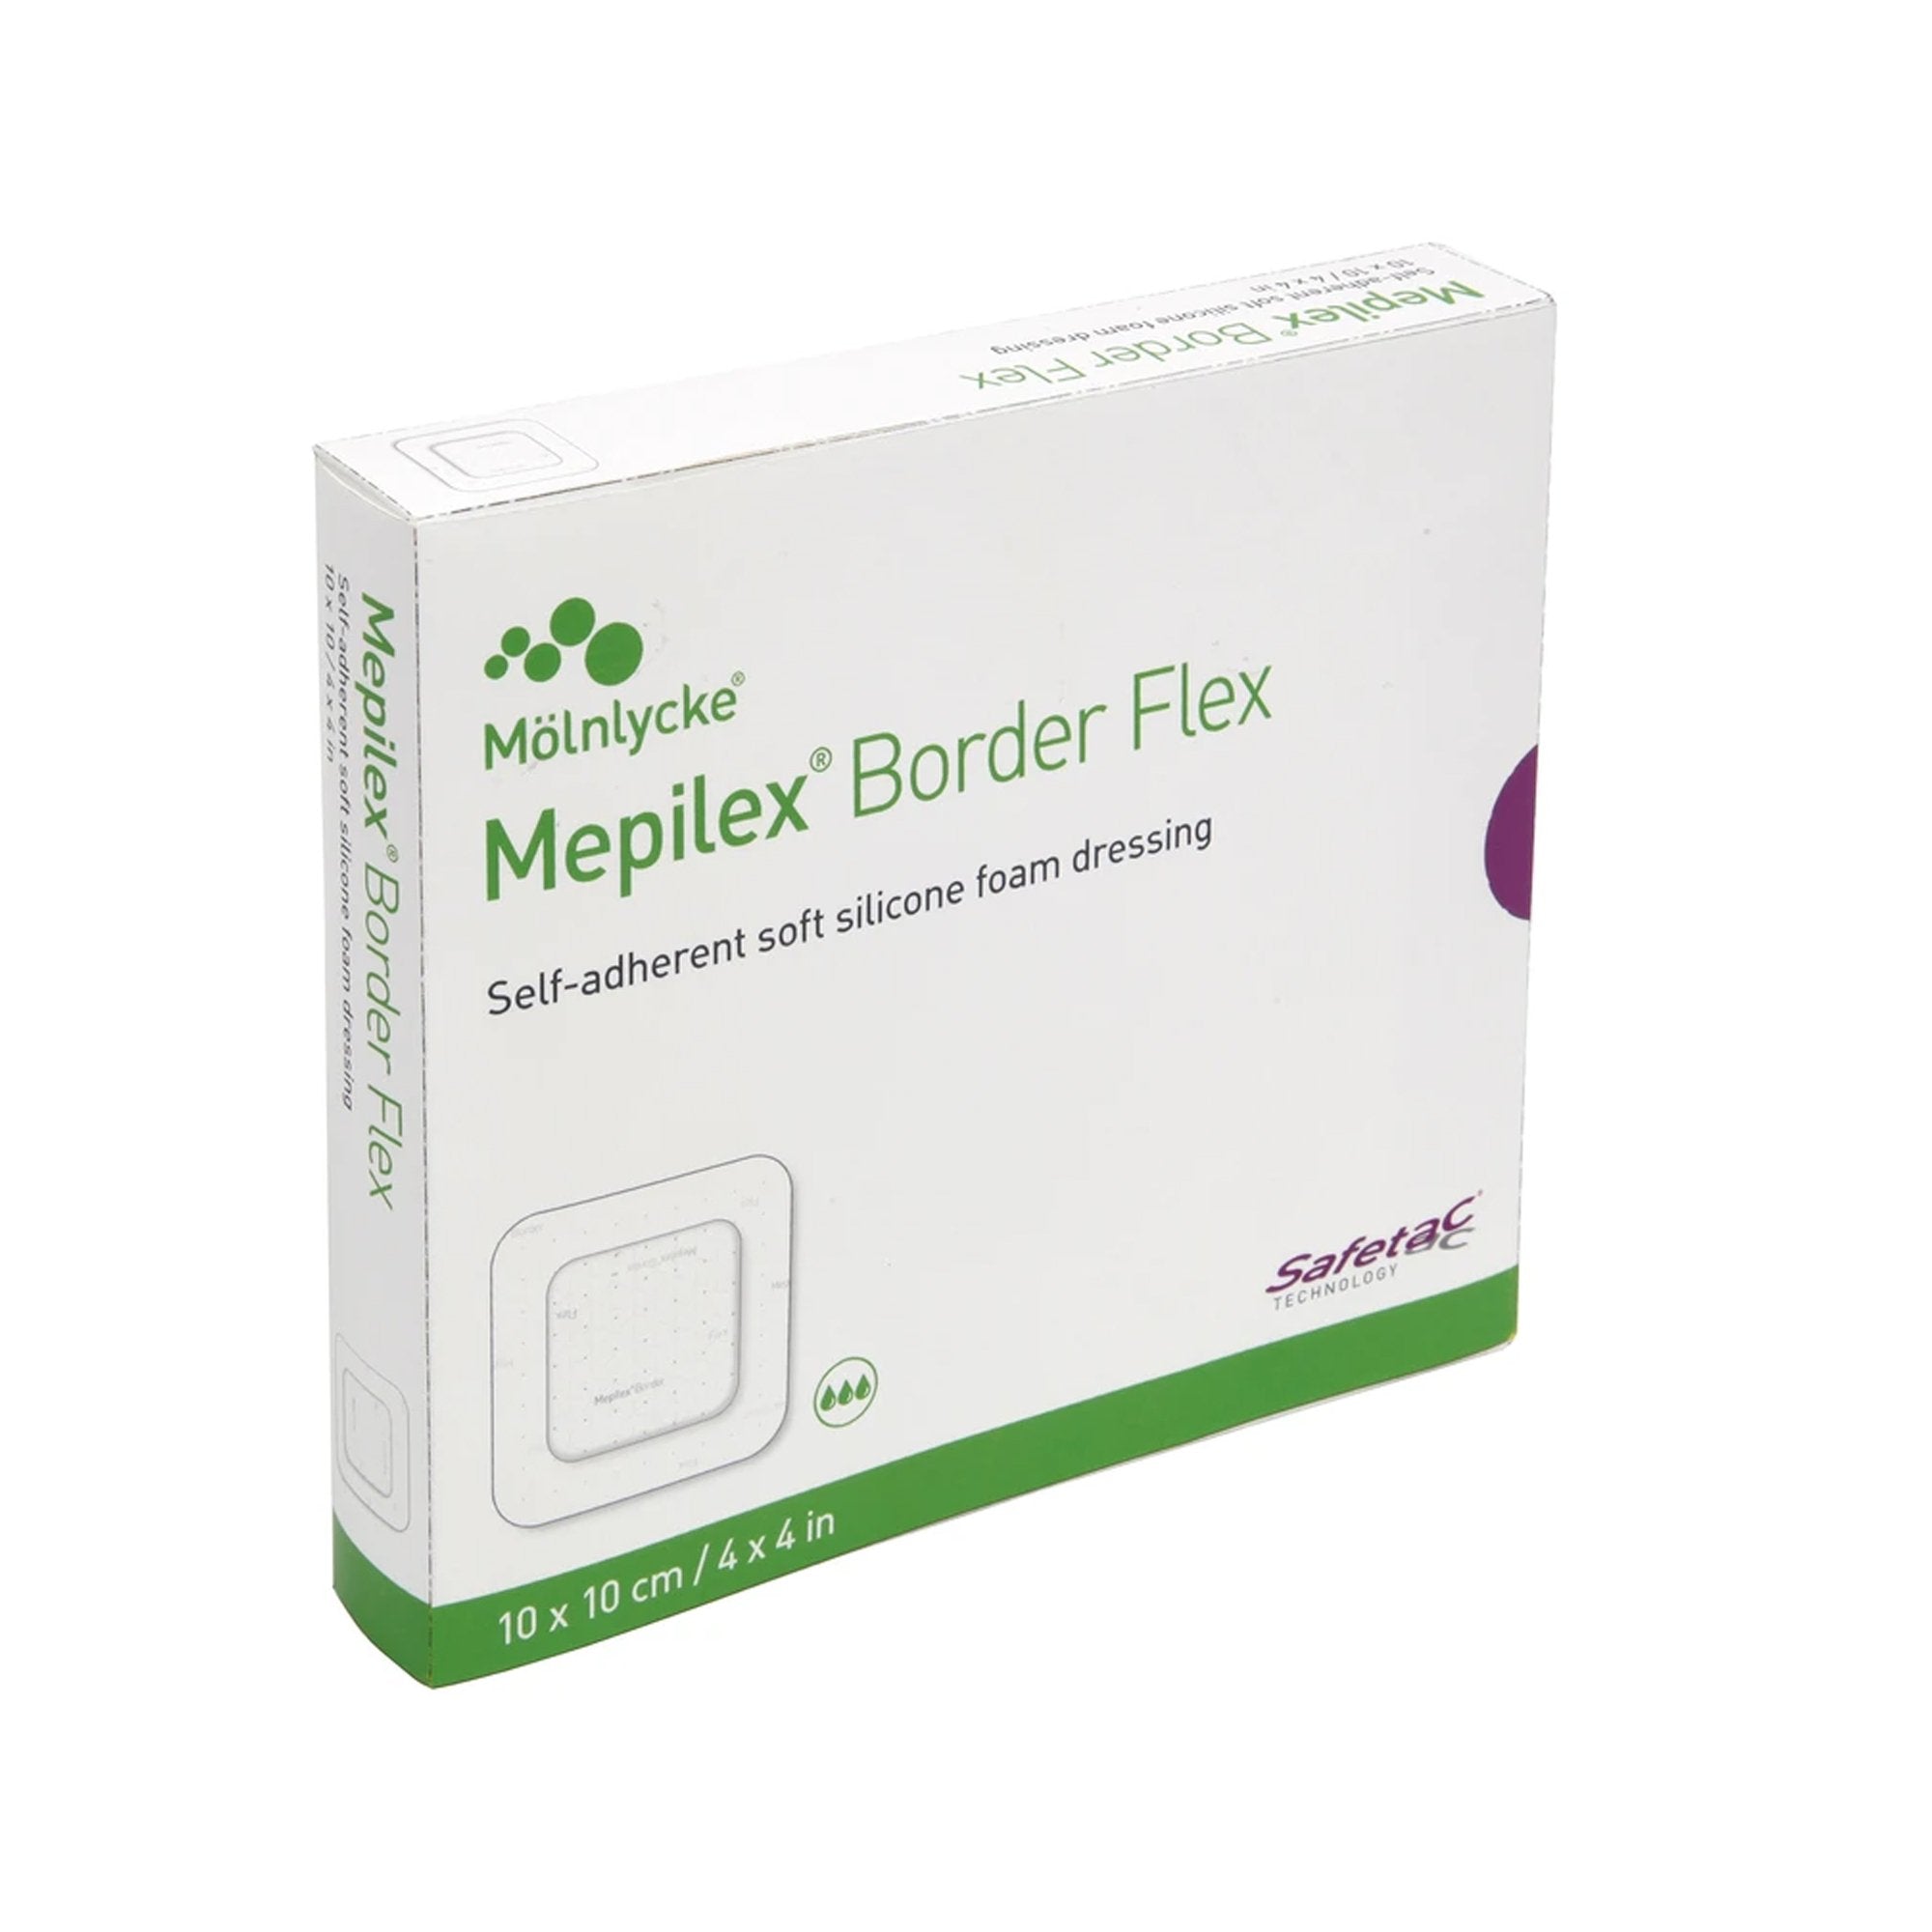 Mepilex® Border Flex Foam Dressing 4x4" - Silicone Adhesive, Sterile (50-Pack)